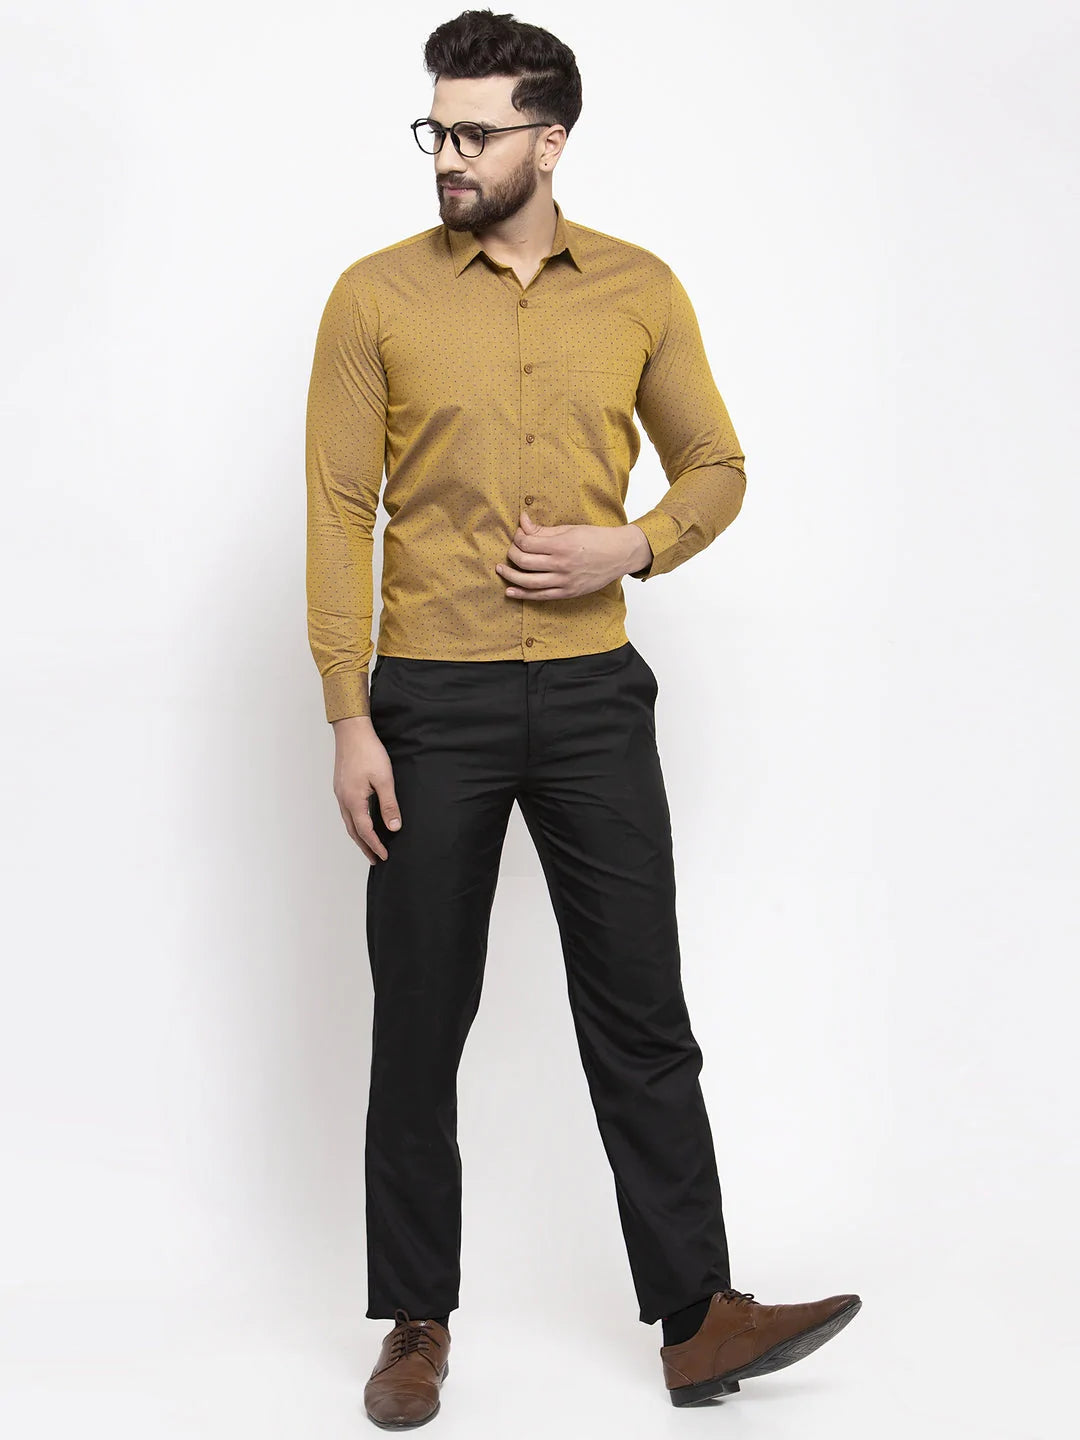 Jainish Yellow Men's Cotton Polka Dots Formal Shirts ( SF 739Mustard )